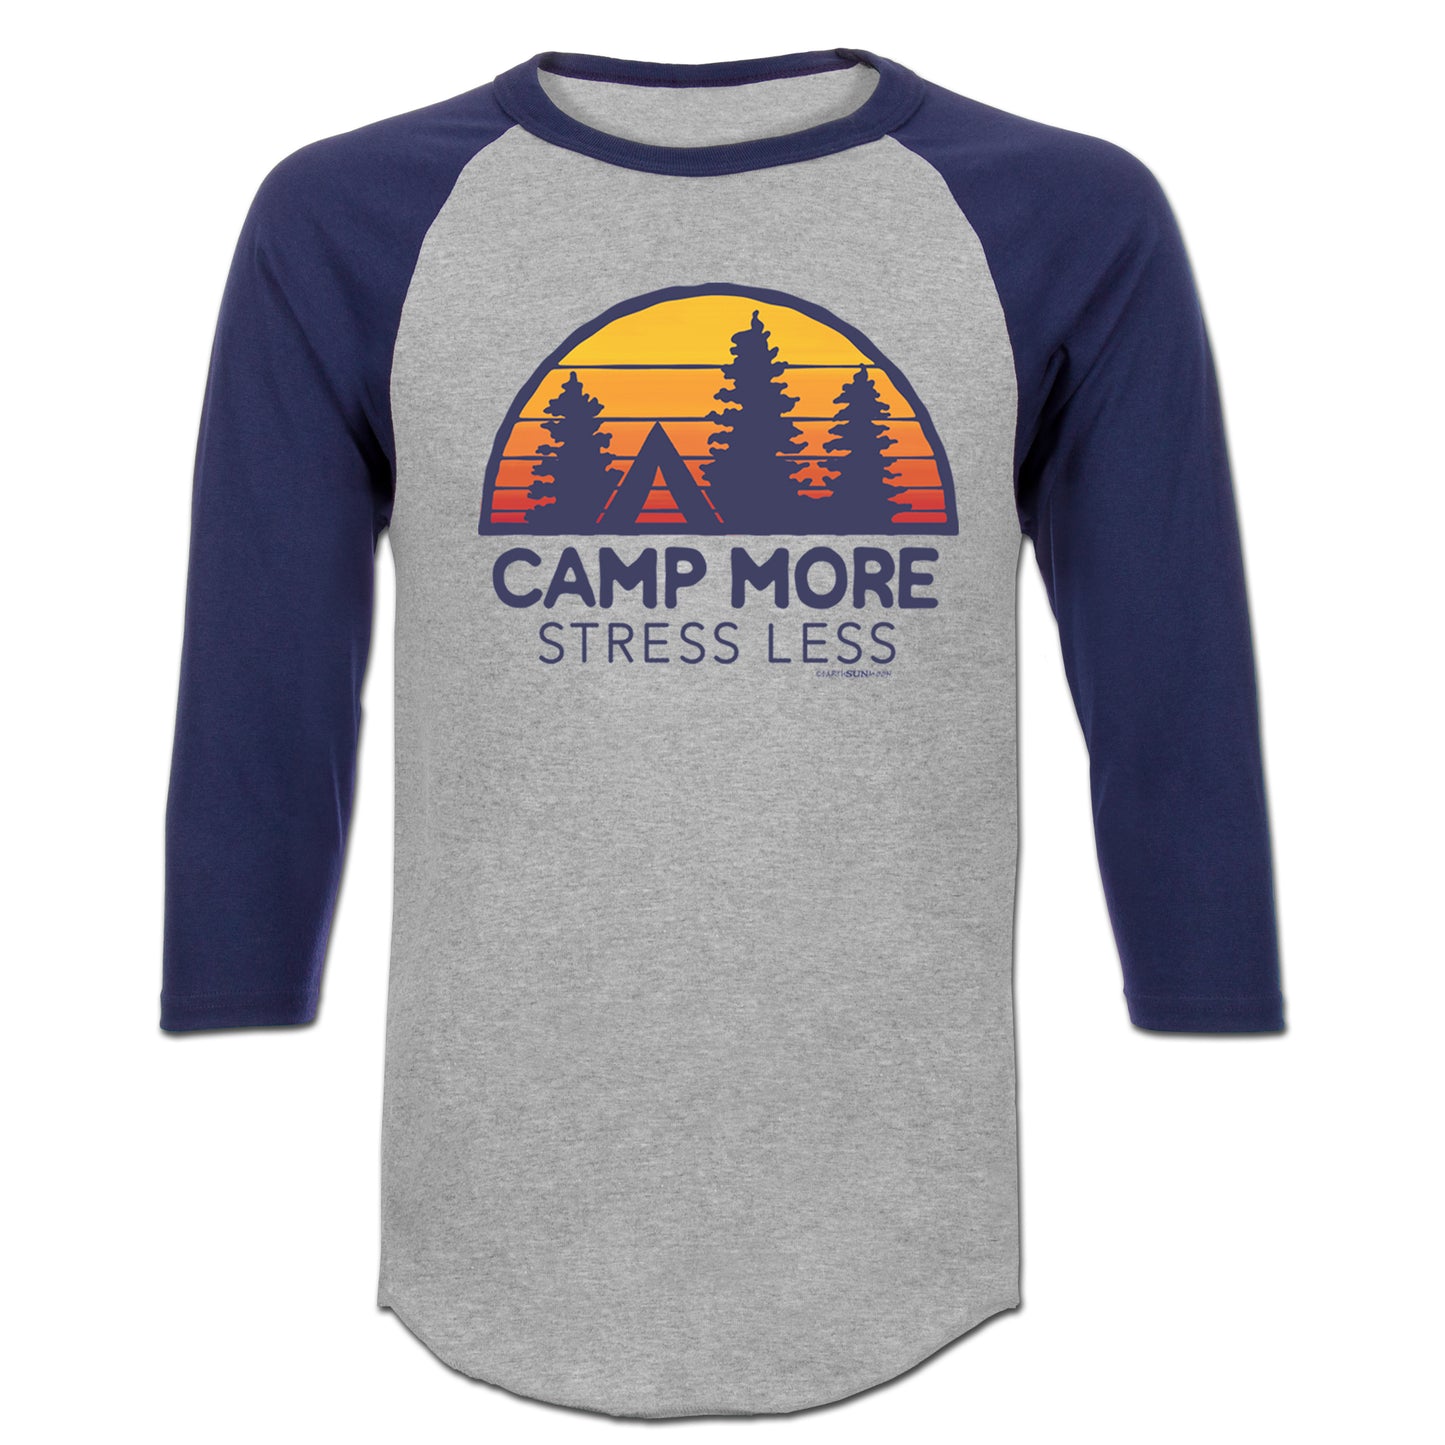 Camp More Stress Less 3/4 Sleeve Raglan